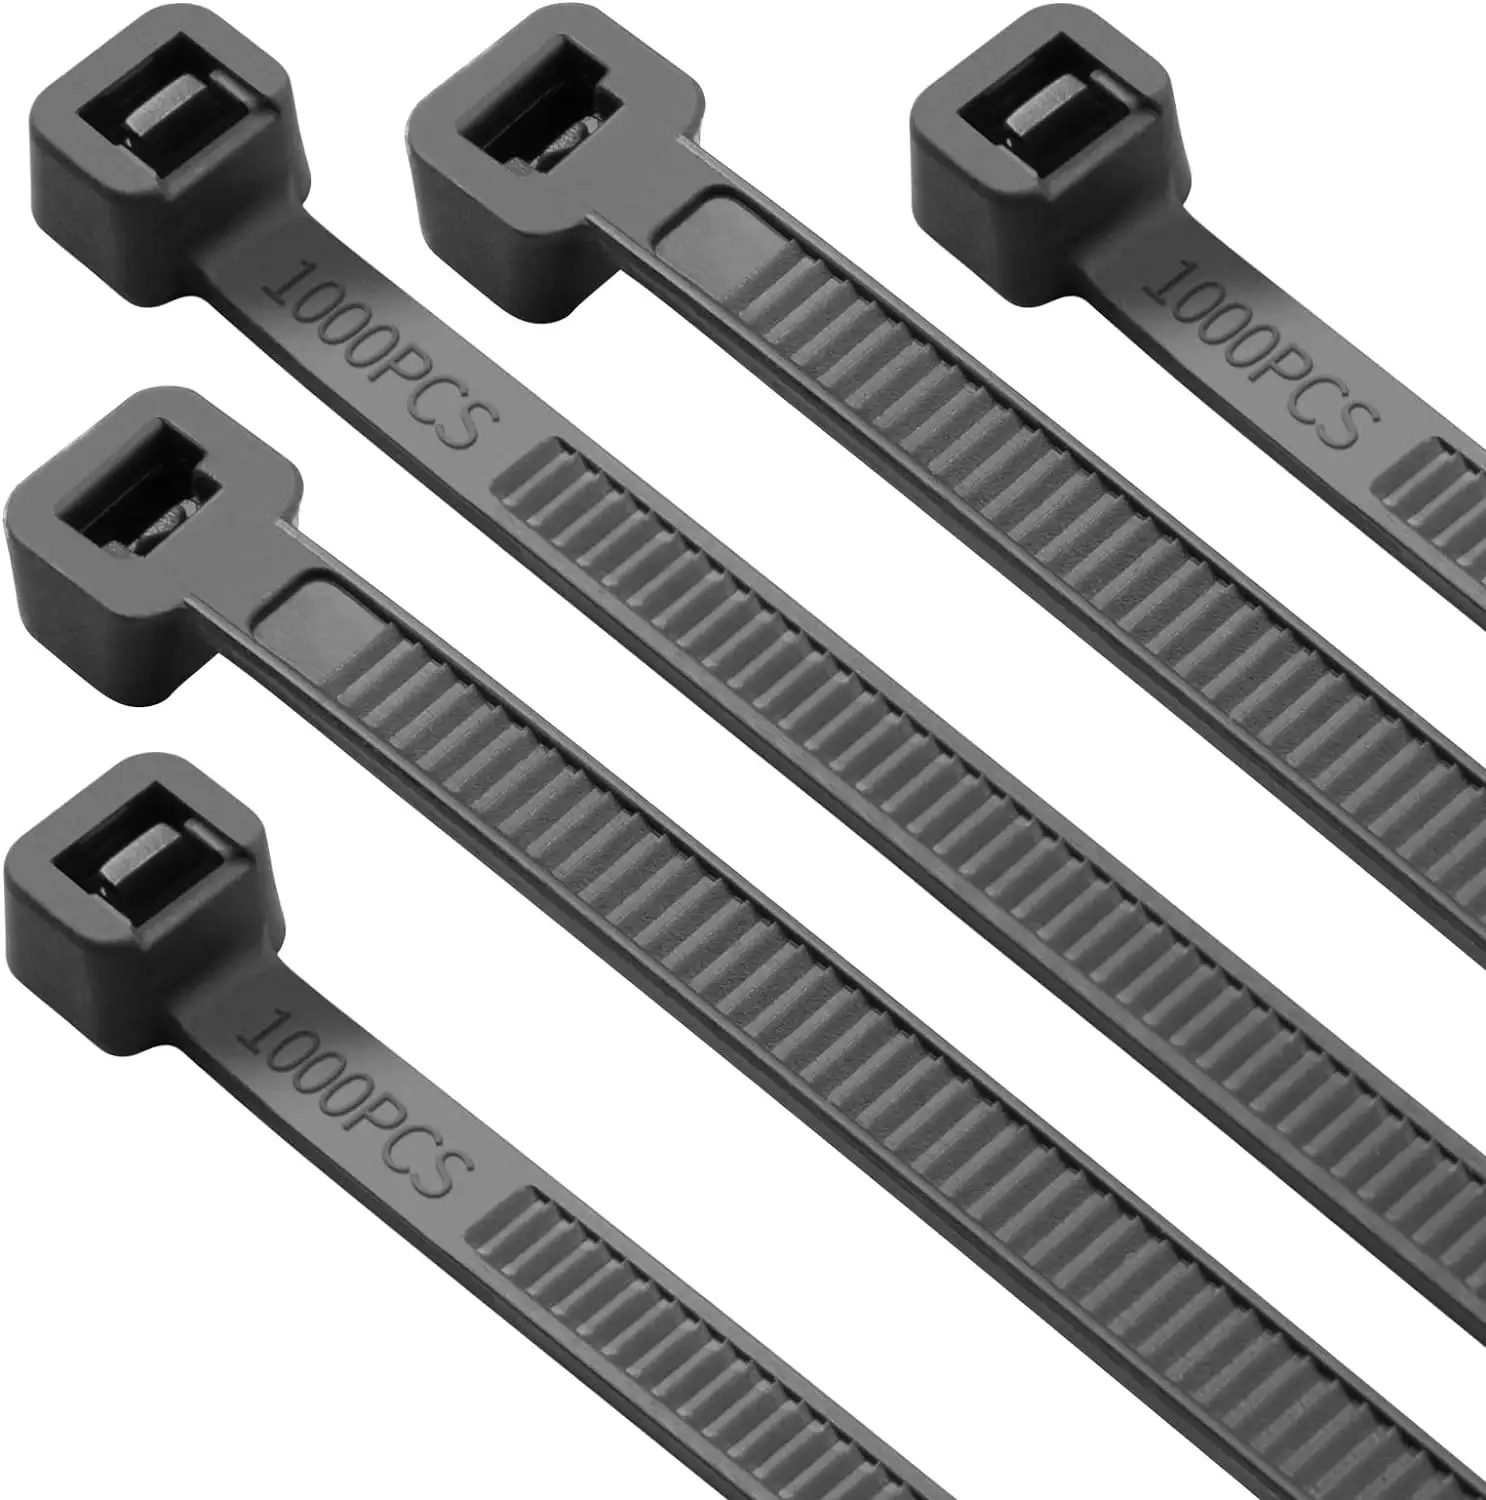 Pa66 Zip Ties 100mm 2.5mm Black Self-Locking Wire Cable Zip Ties Manufacturer High Quality Plastic Zip Wire Ties